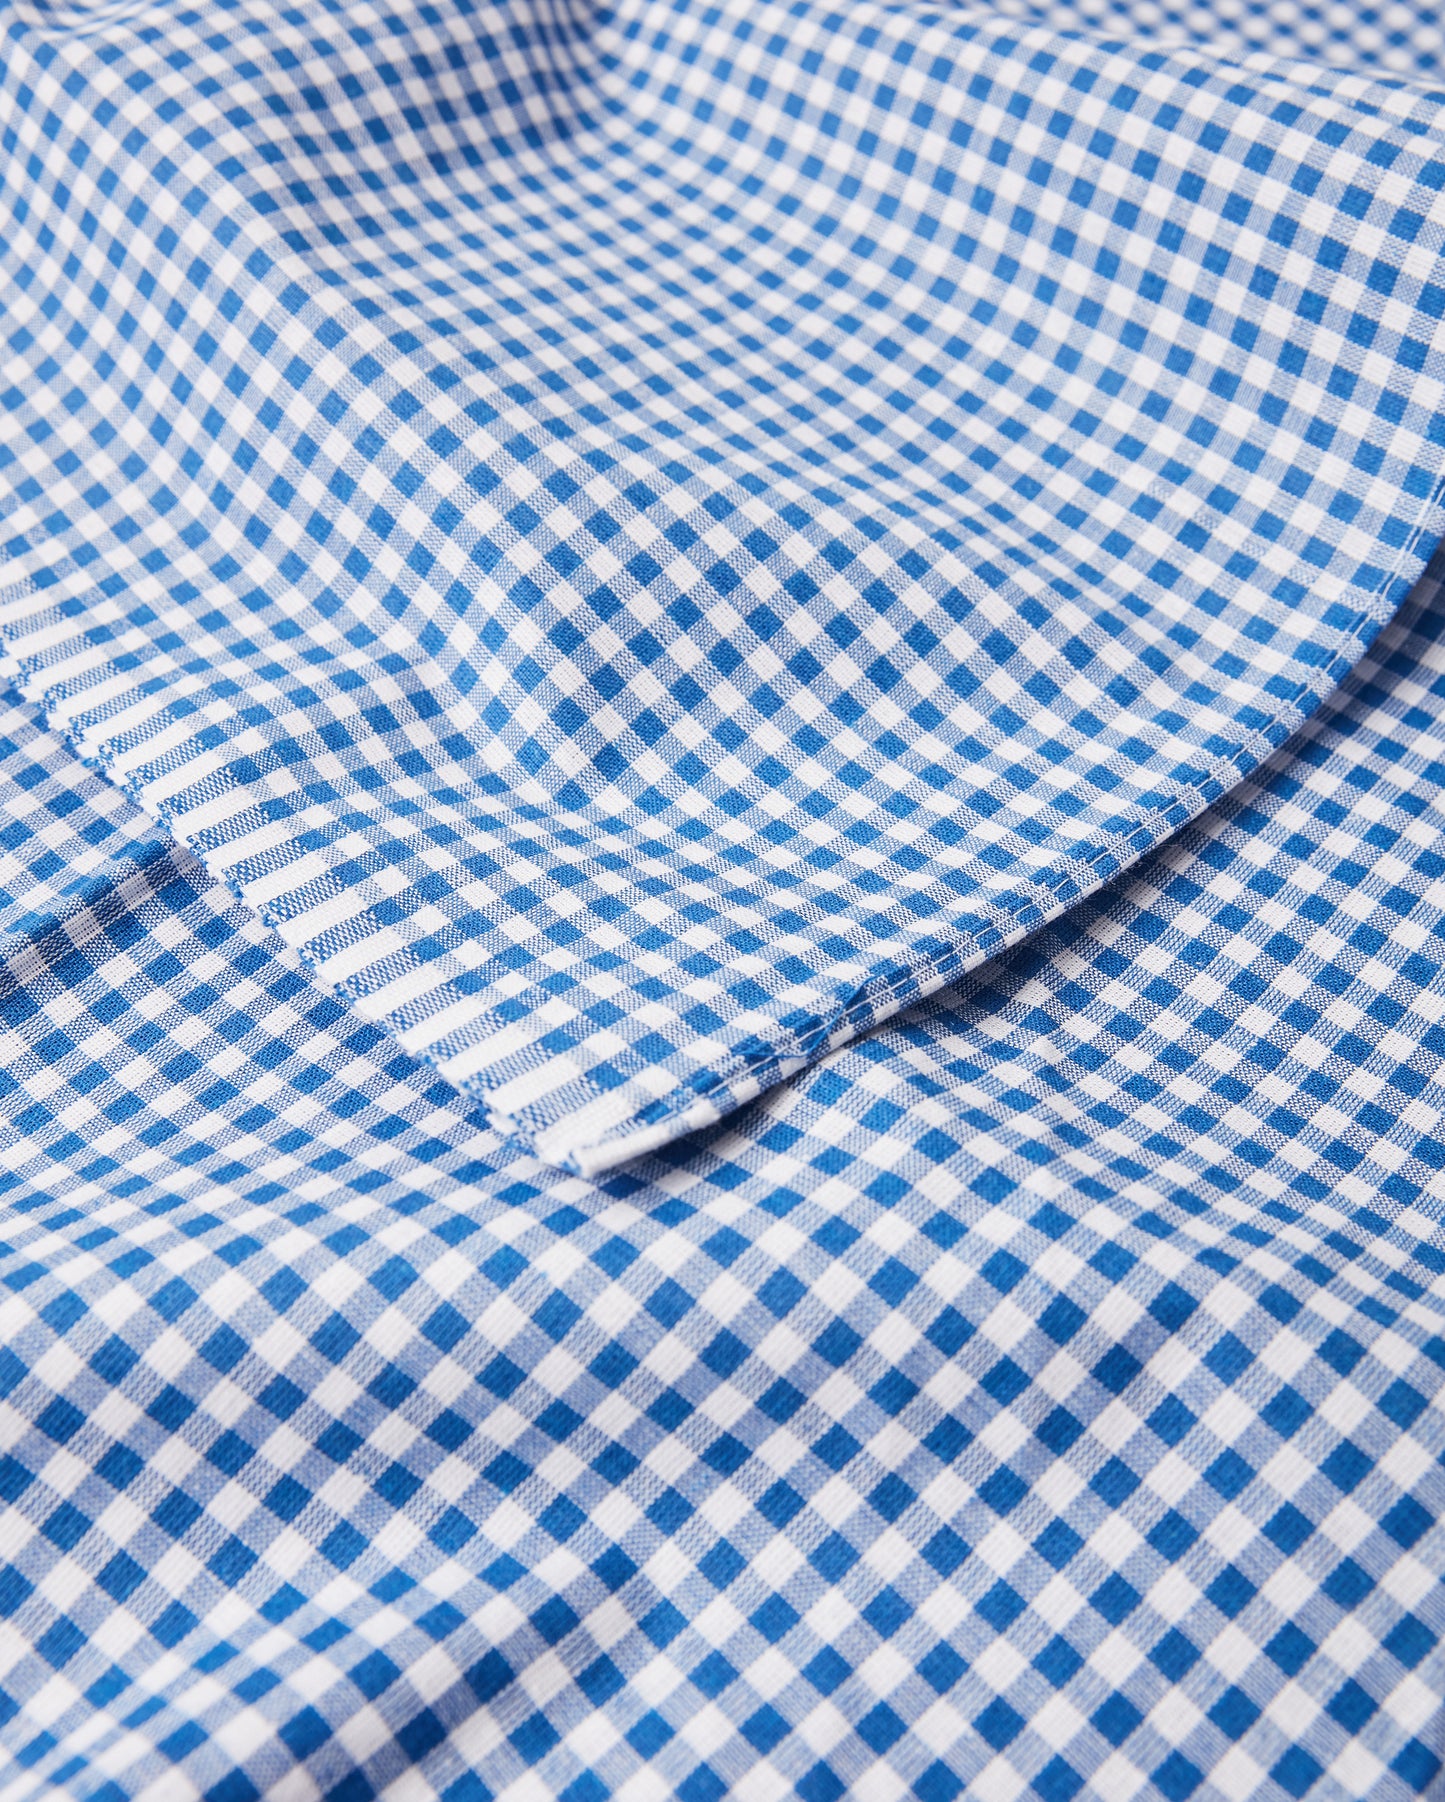 Checked Cotton Table Cloth - Blue - Ocoza